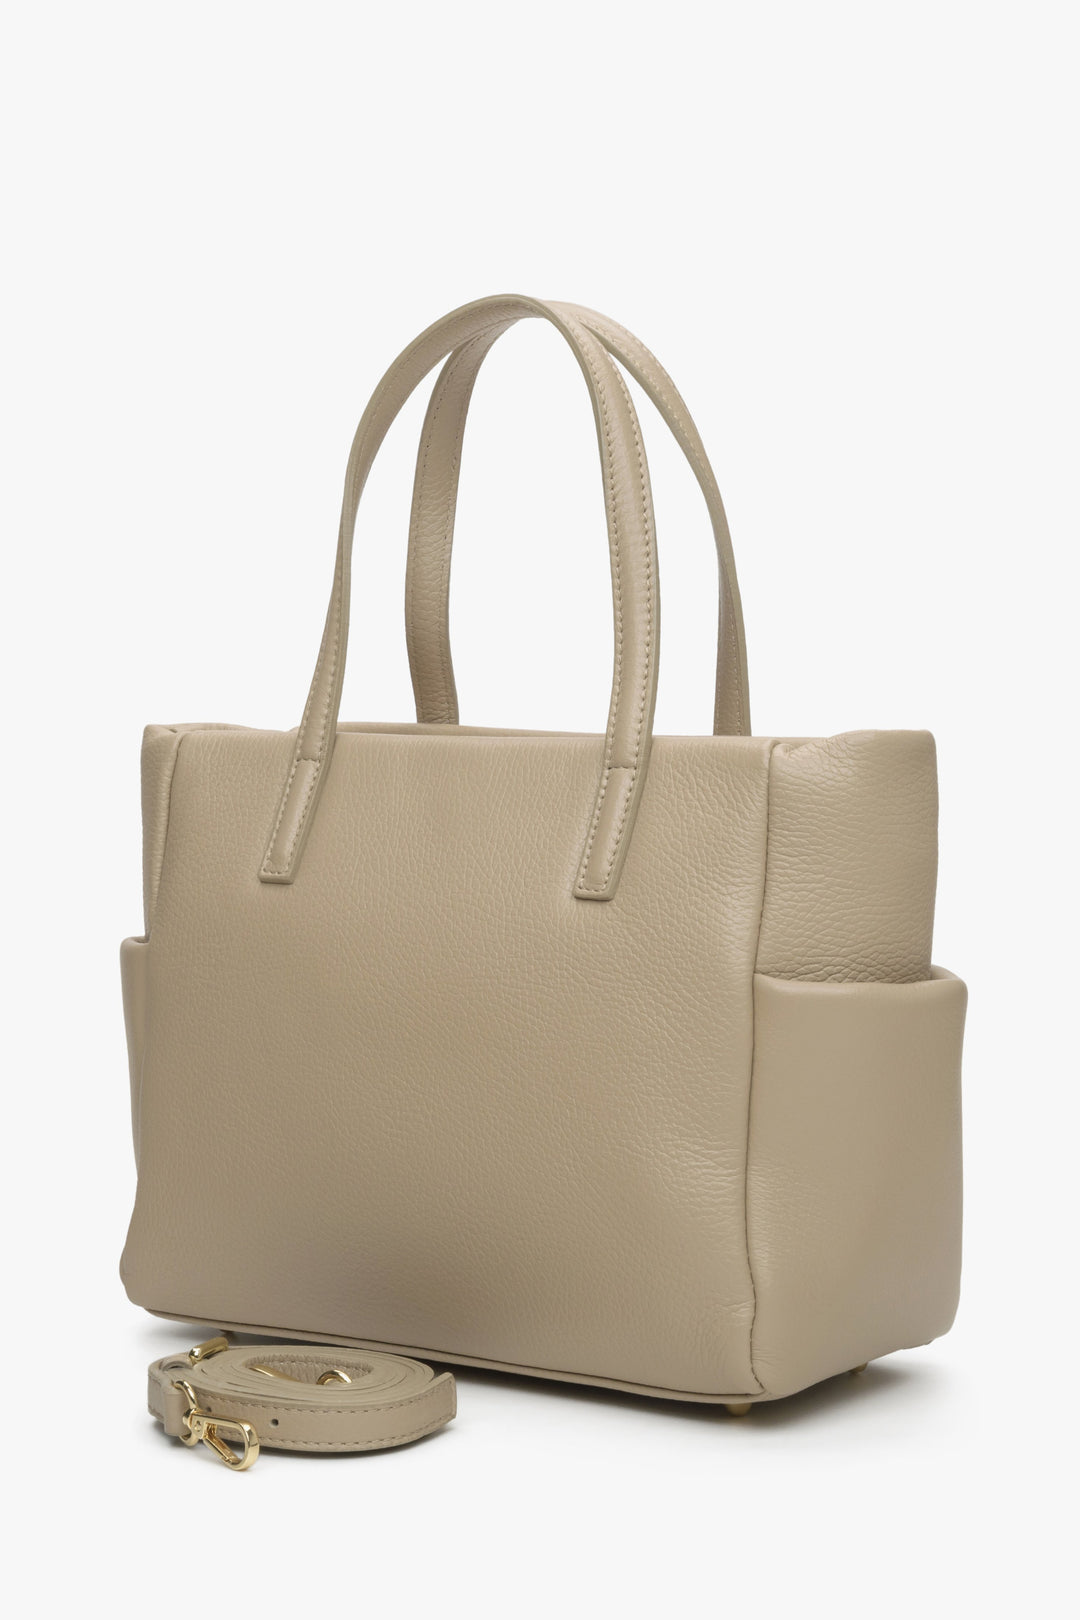 Women's beige leather handbag made of Italian genuine leather by Estro.